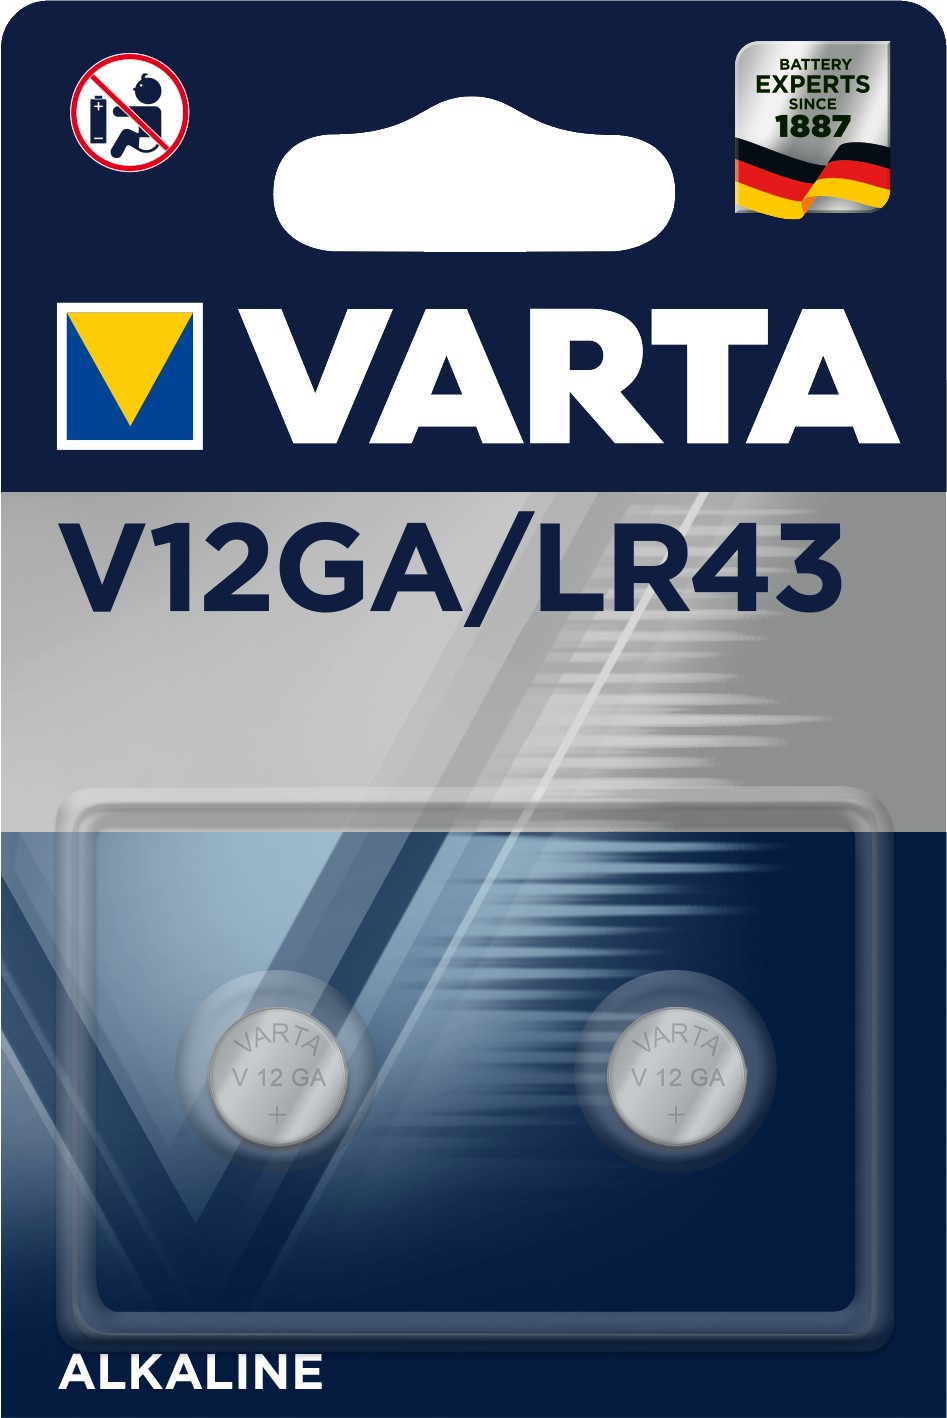 VARTA LR43/V12GA x2 Pile alcaline 1,5V VARTA